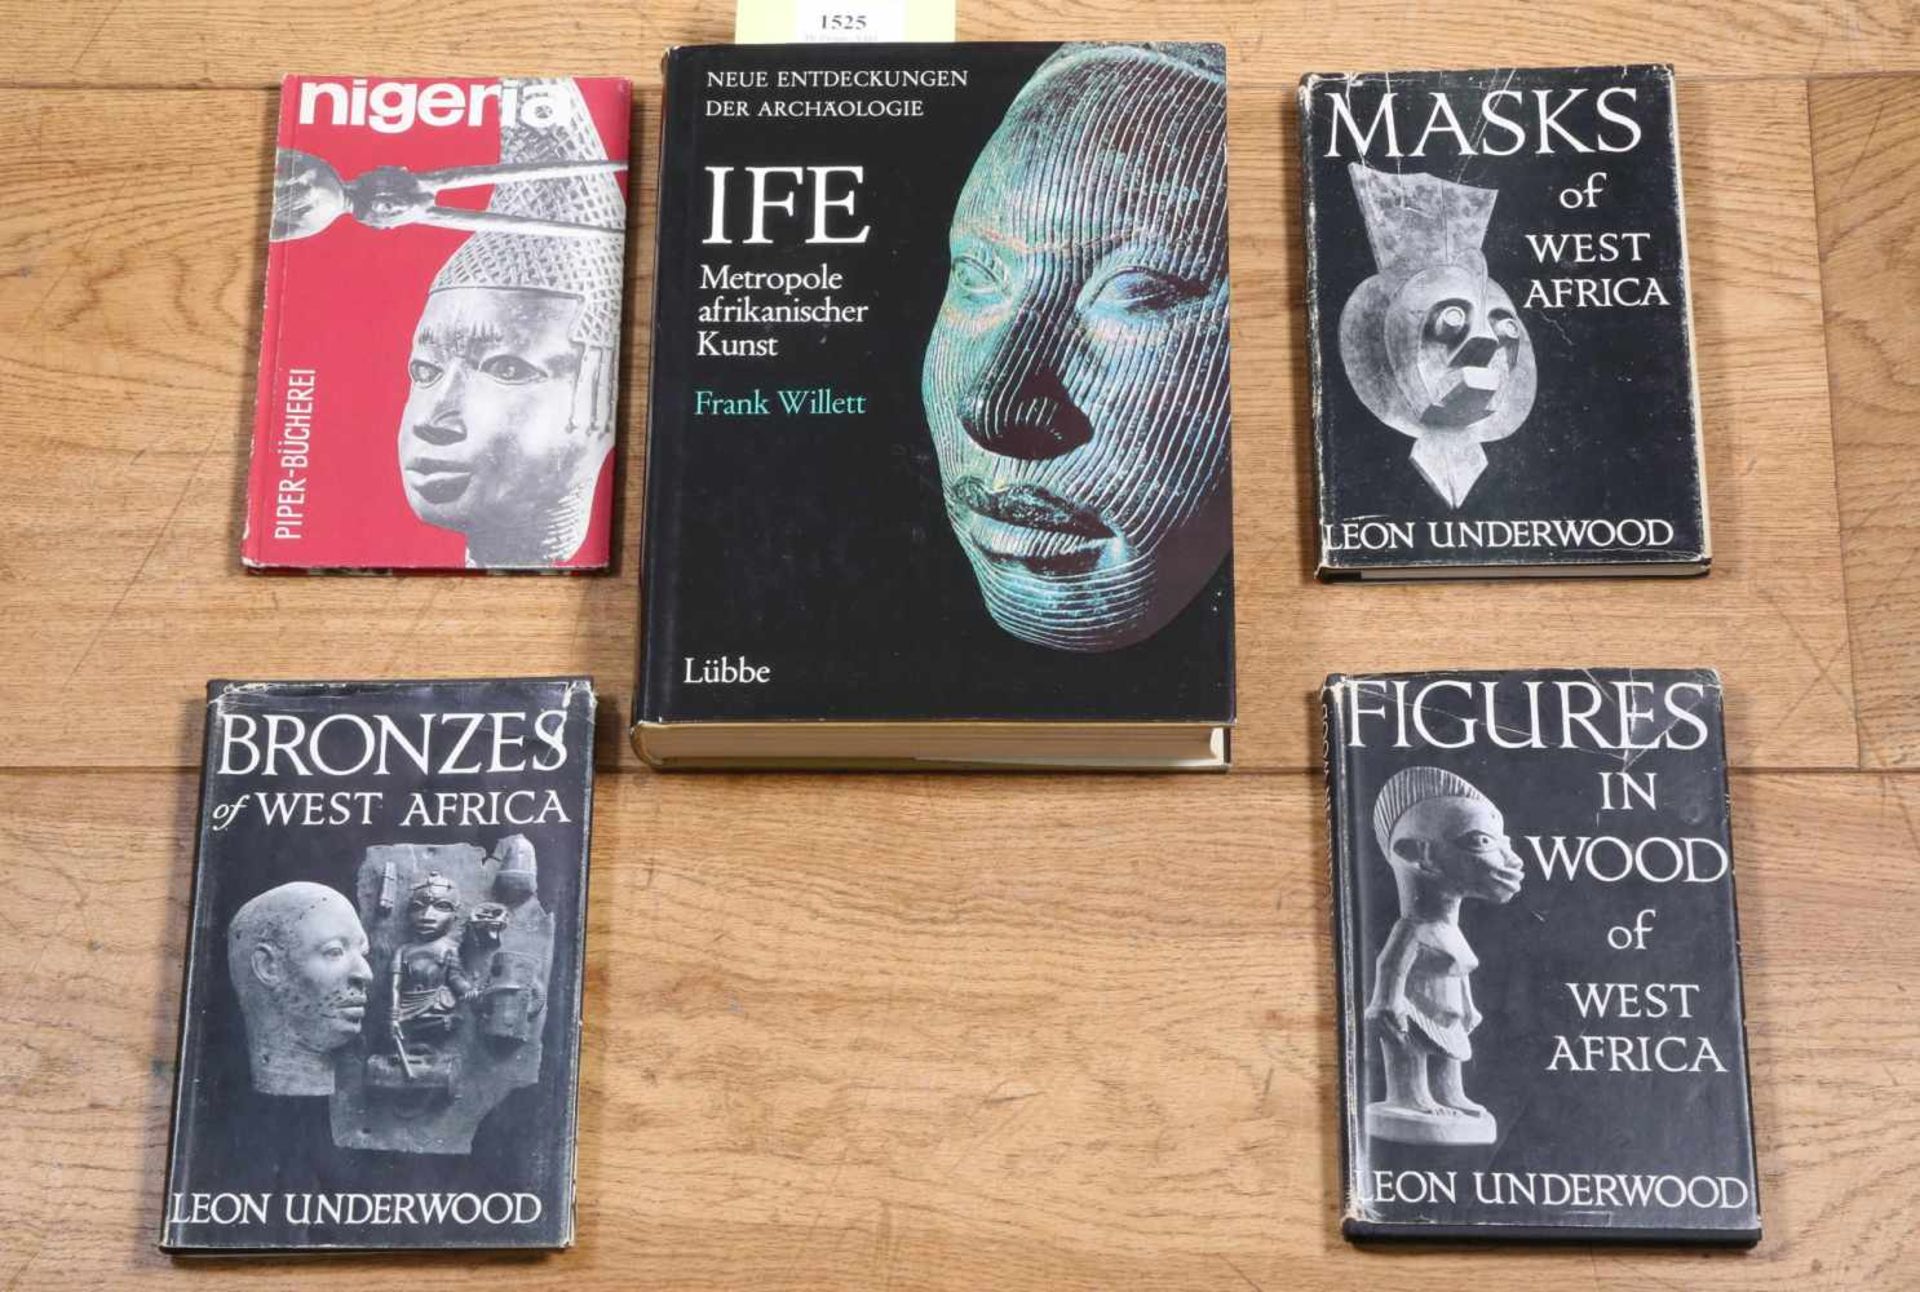 IFE Metropole afrikanischer Kunst, Neue Entdeckungen der Archäologie,herewith Vol. I, II and II of